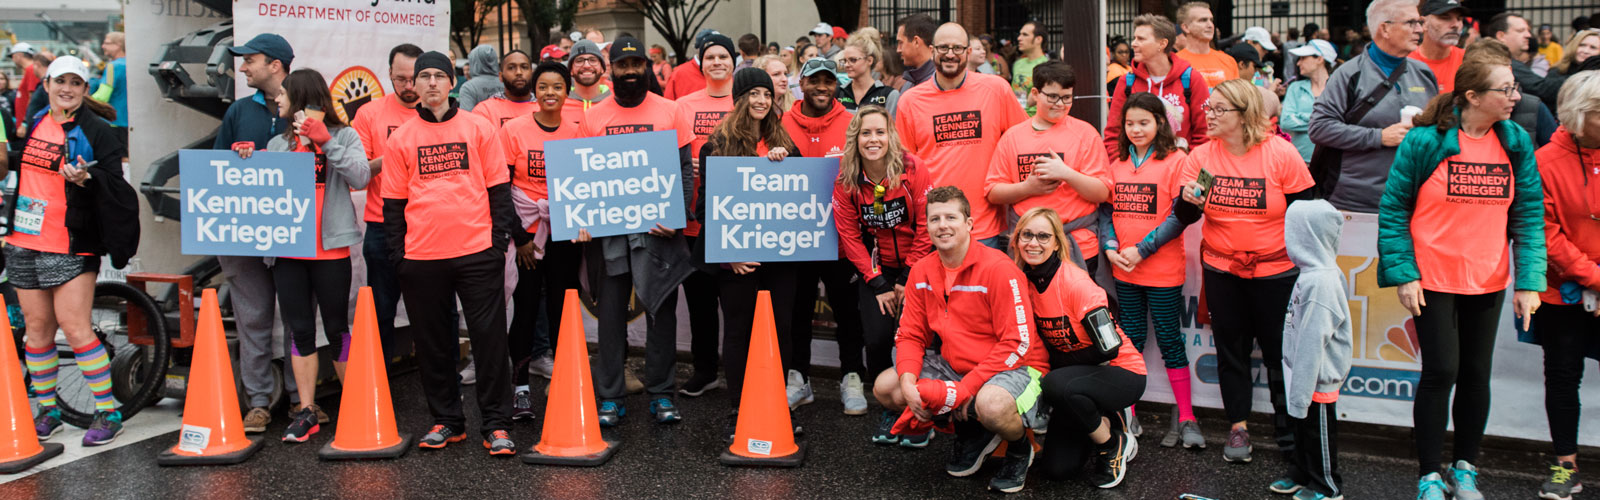 Team Kennedy Krieger at the Baltimore Running Festival.